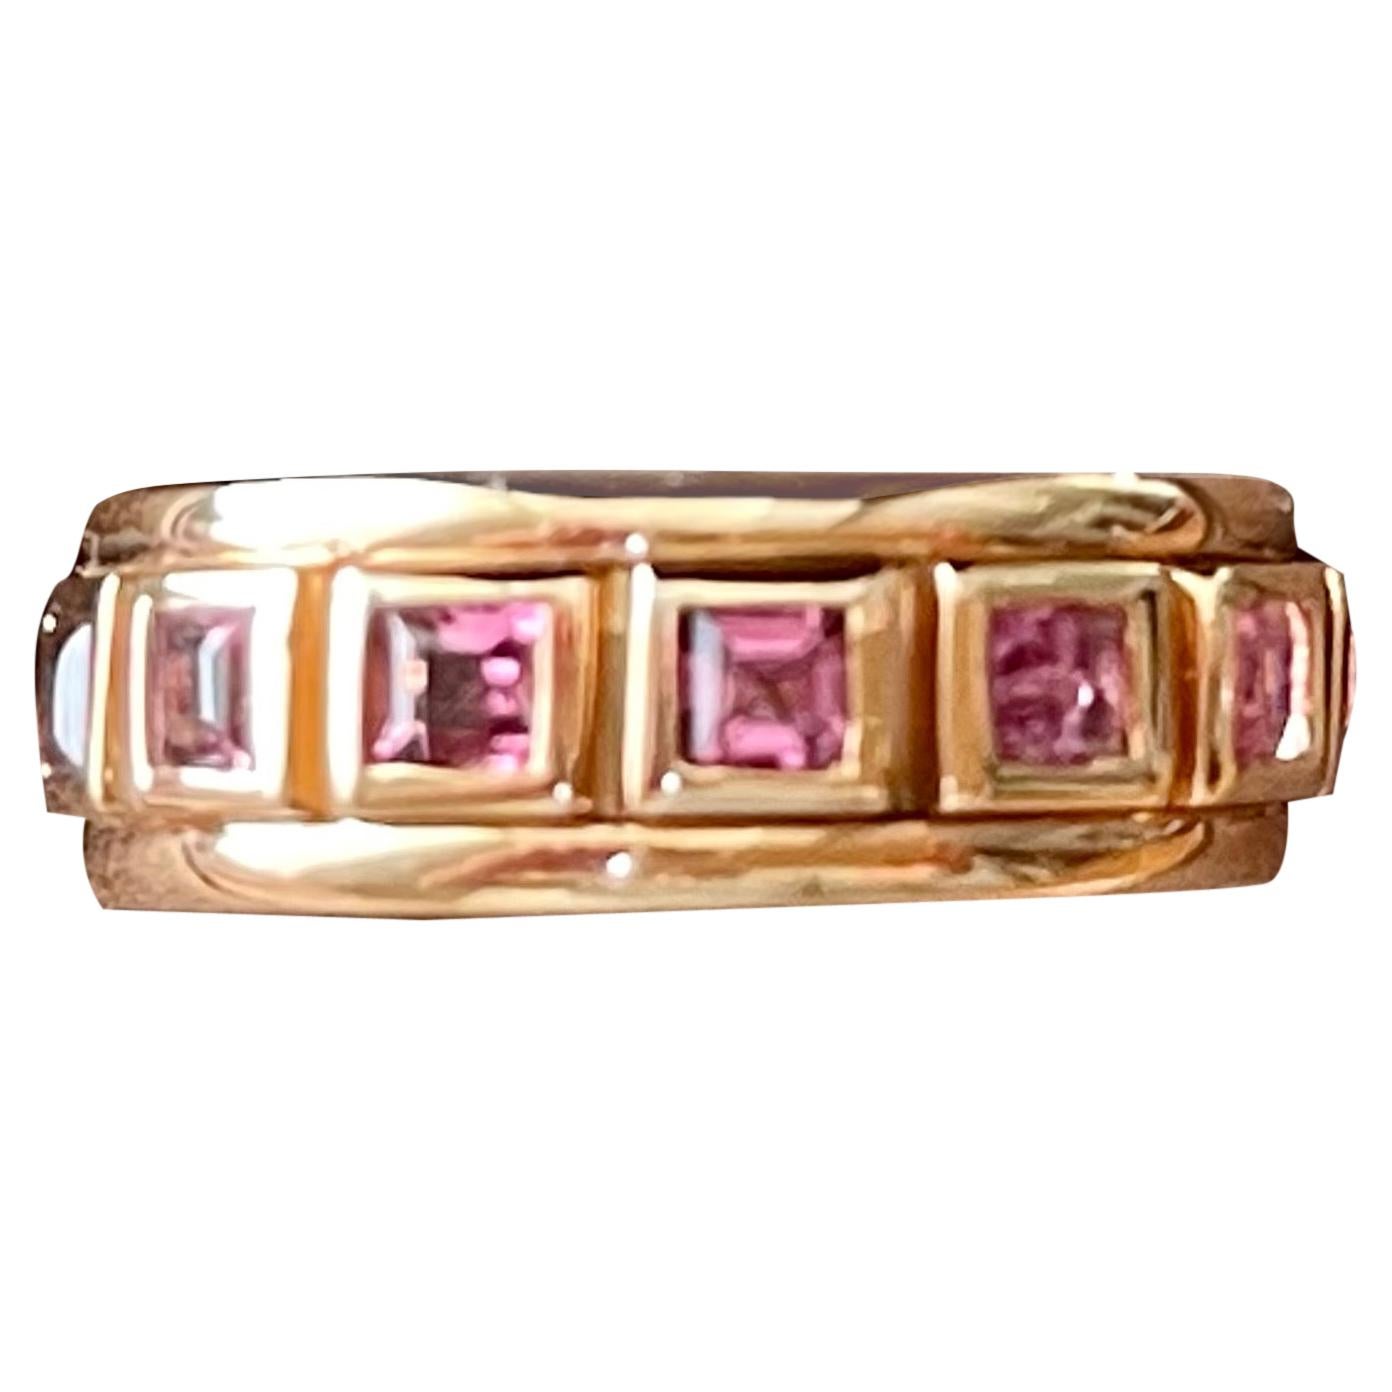 18 K Rose Gold Eternity Ring Band Square Cut Pink Tourmaline